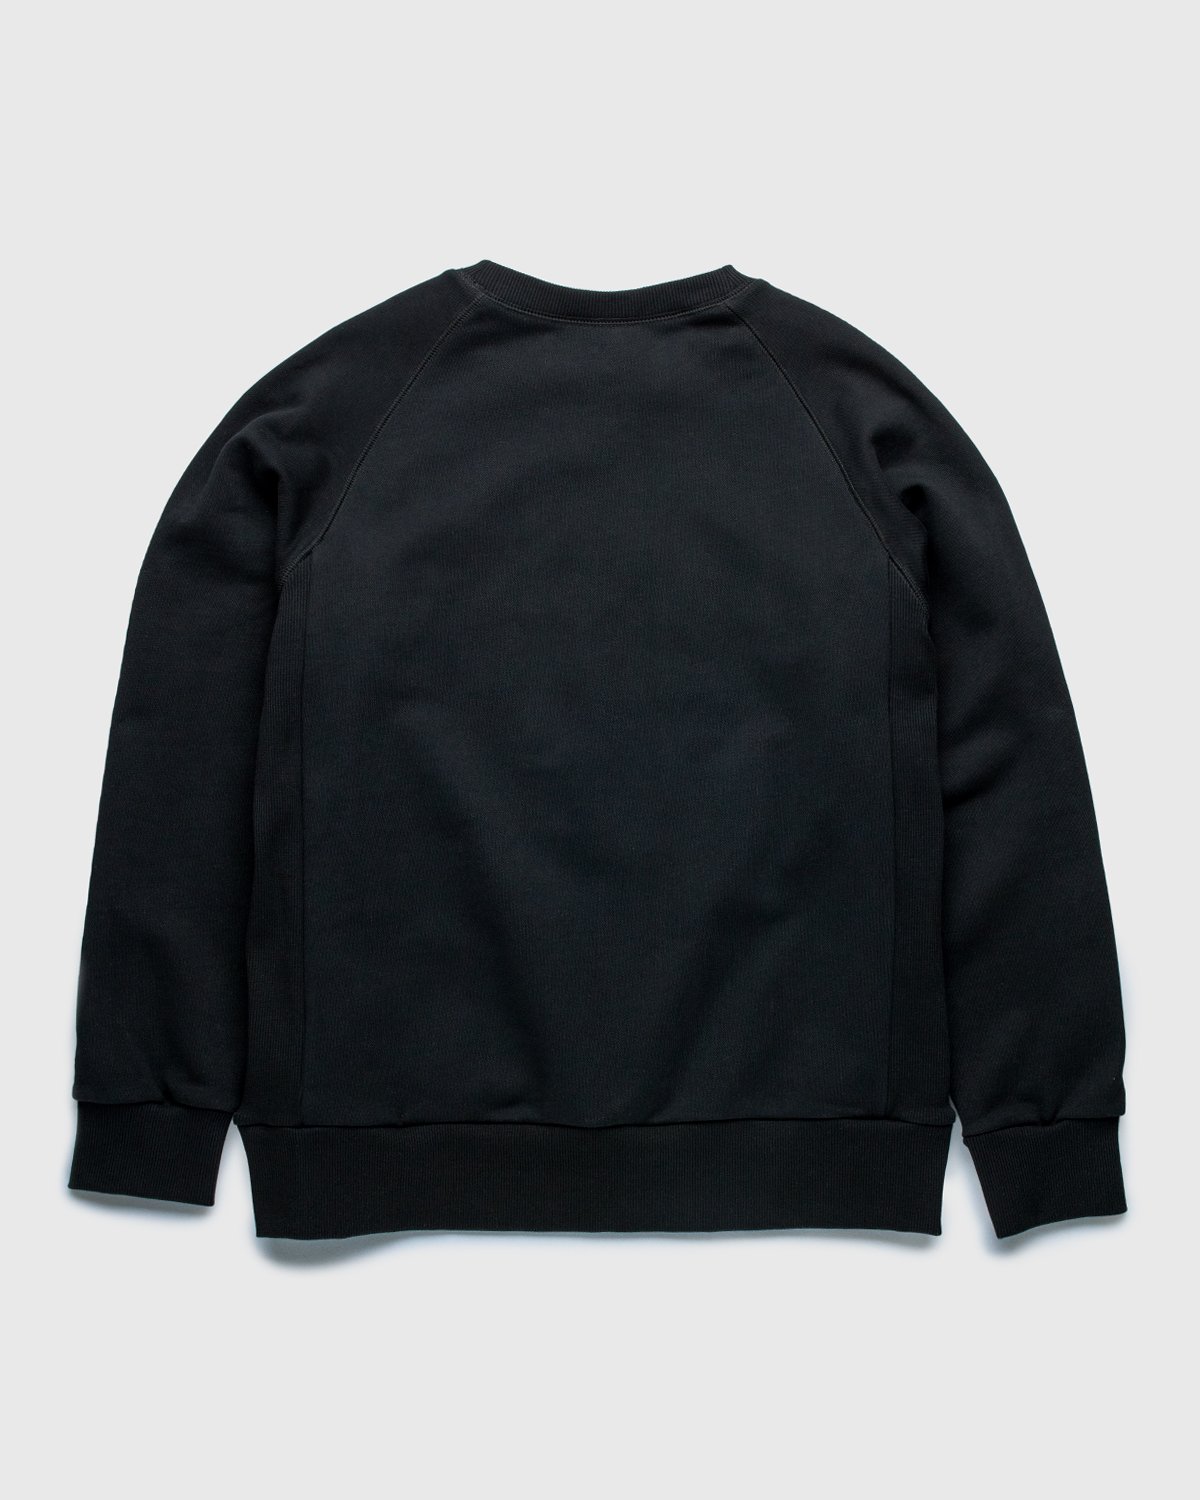 A.P.C. x Sacai - Tani Sweater Black - Clothing - Black - Image 2